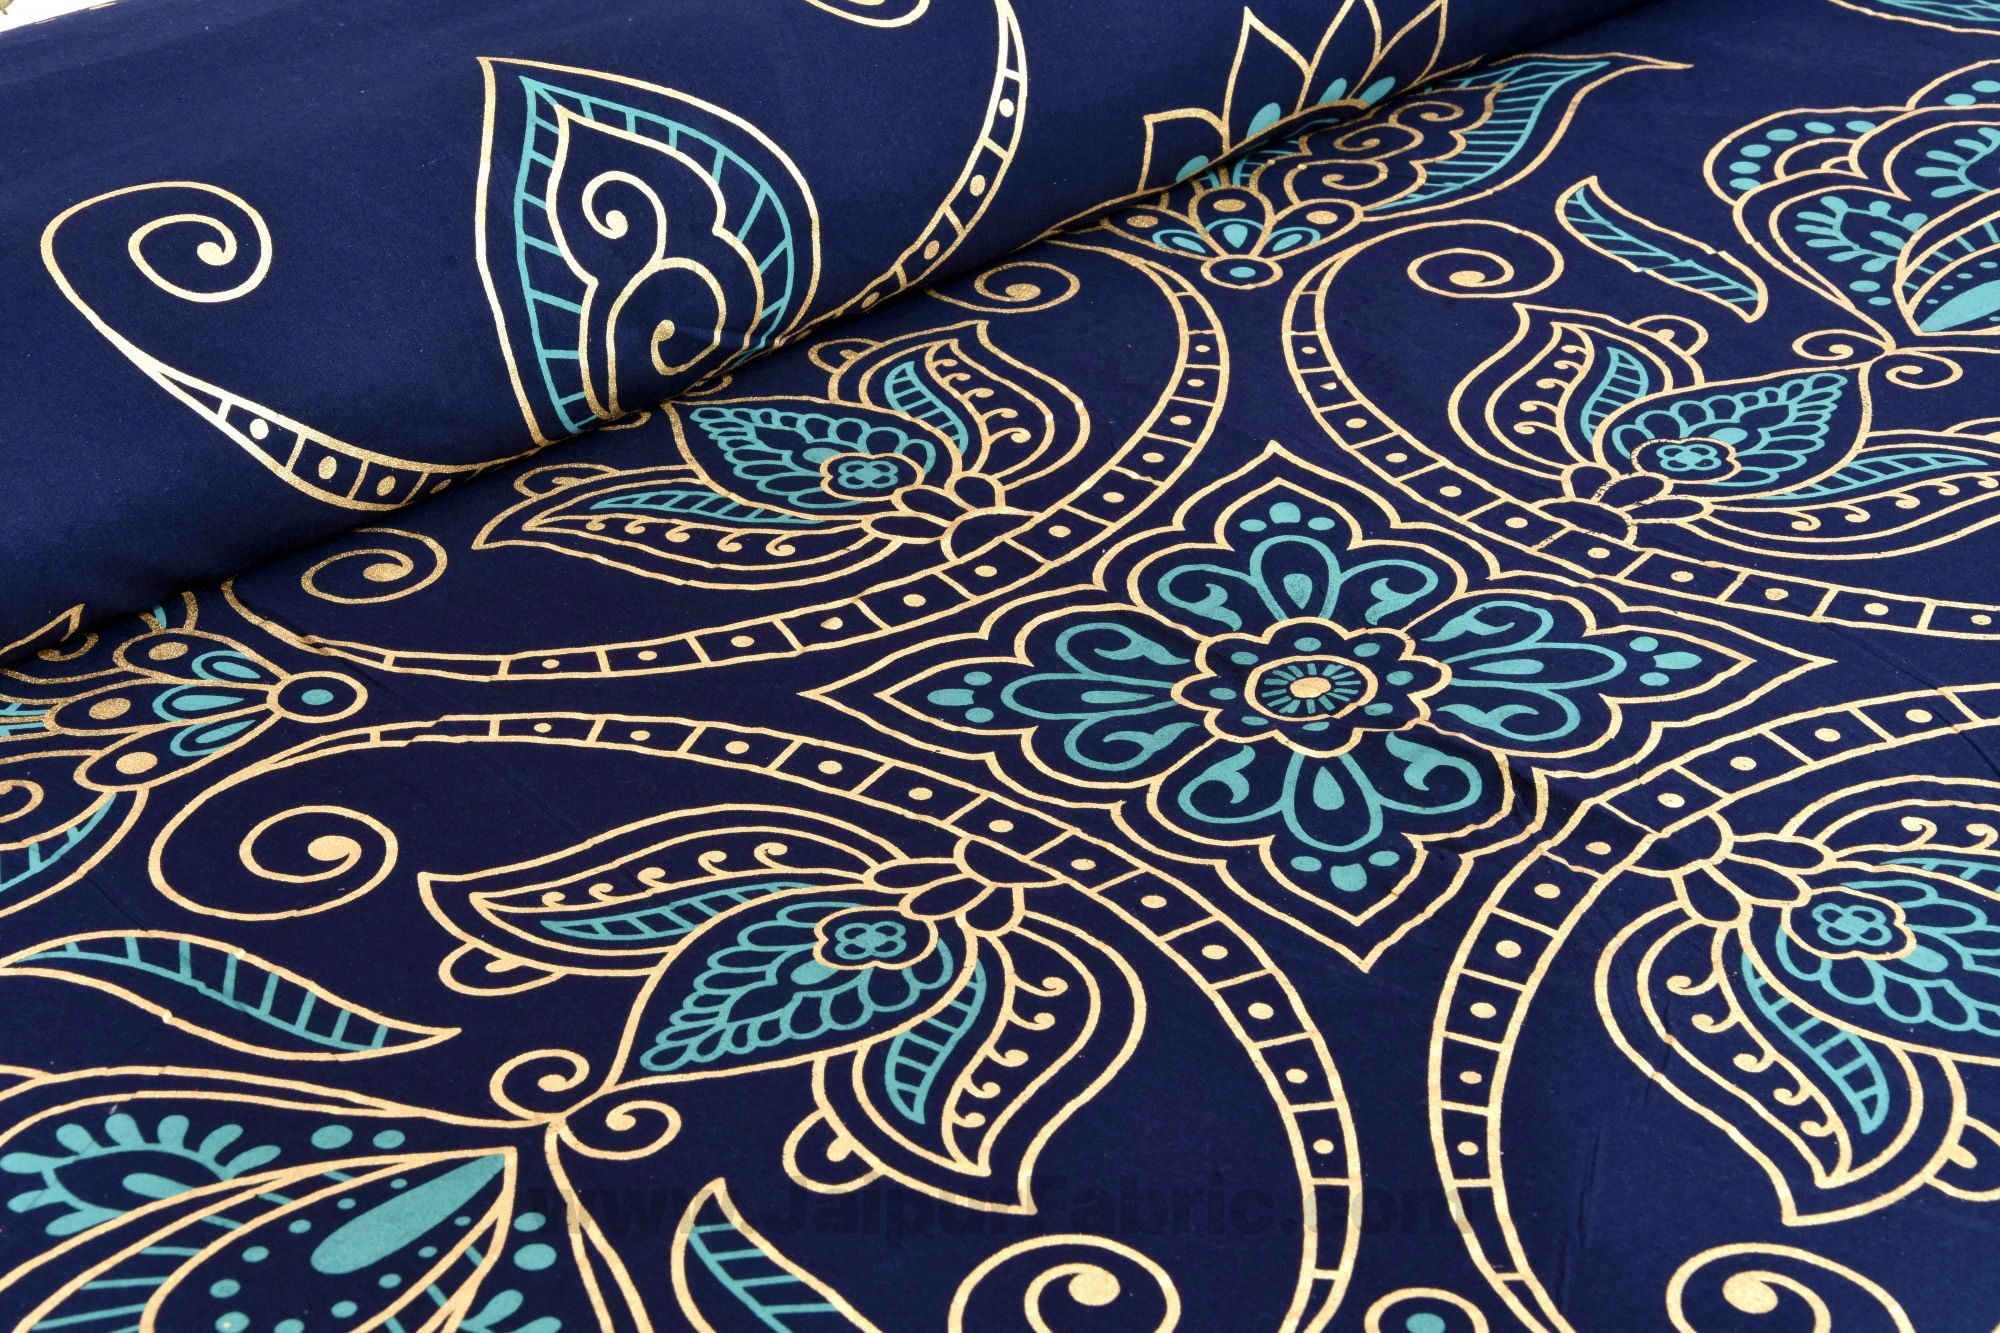 Royal Goldi Navy Blue King Size Bed Sheet